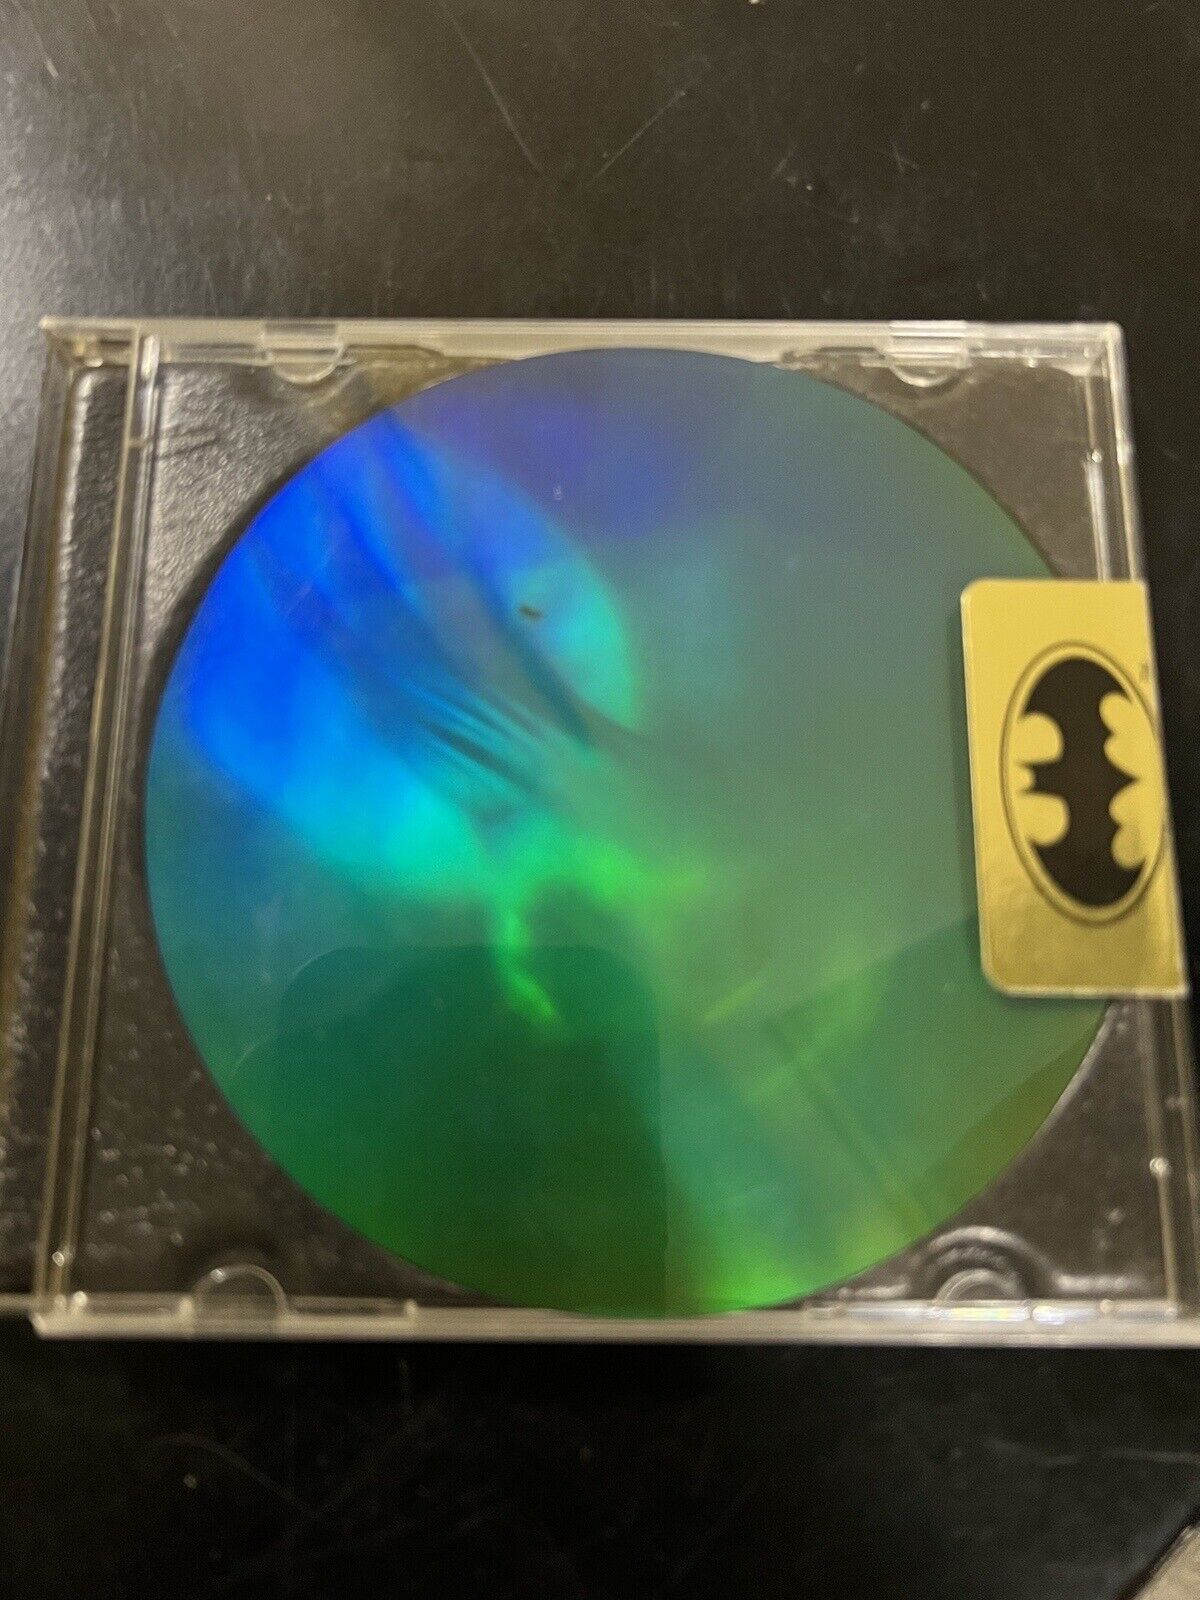 Skybox Batman Saga Of The Dark Knight Skydisc Hologram PROMO CD #’d Sealed